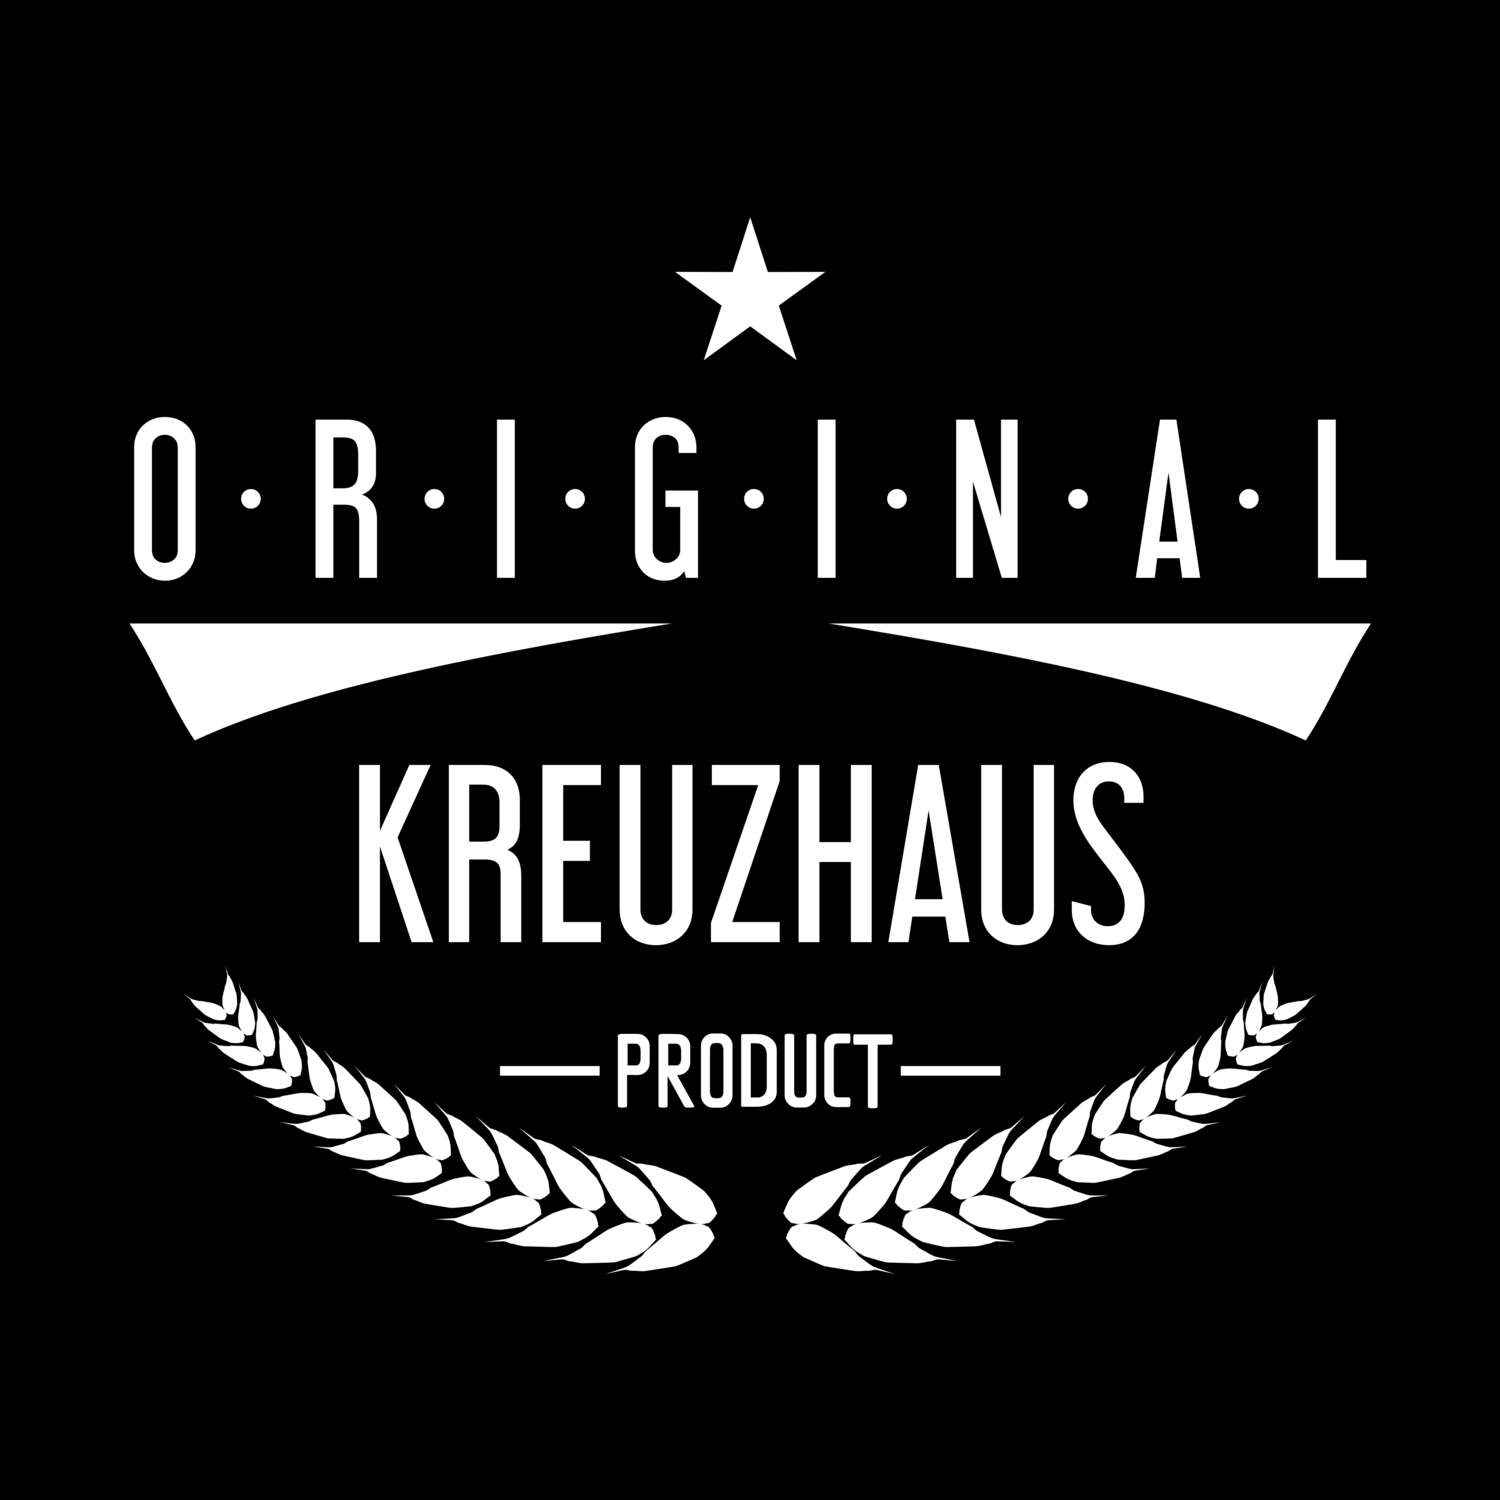 Kreuzhaus T-Shirt »Original Product«